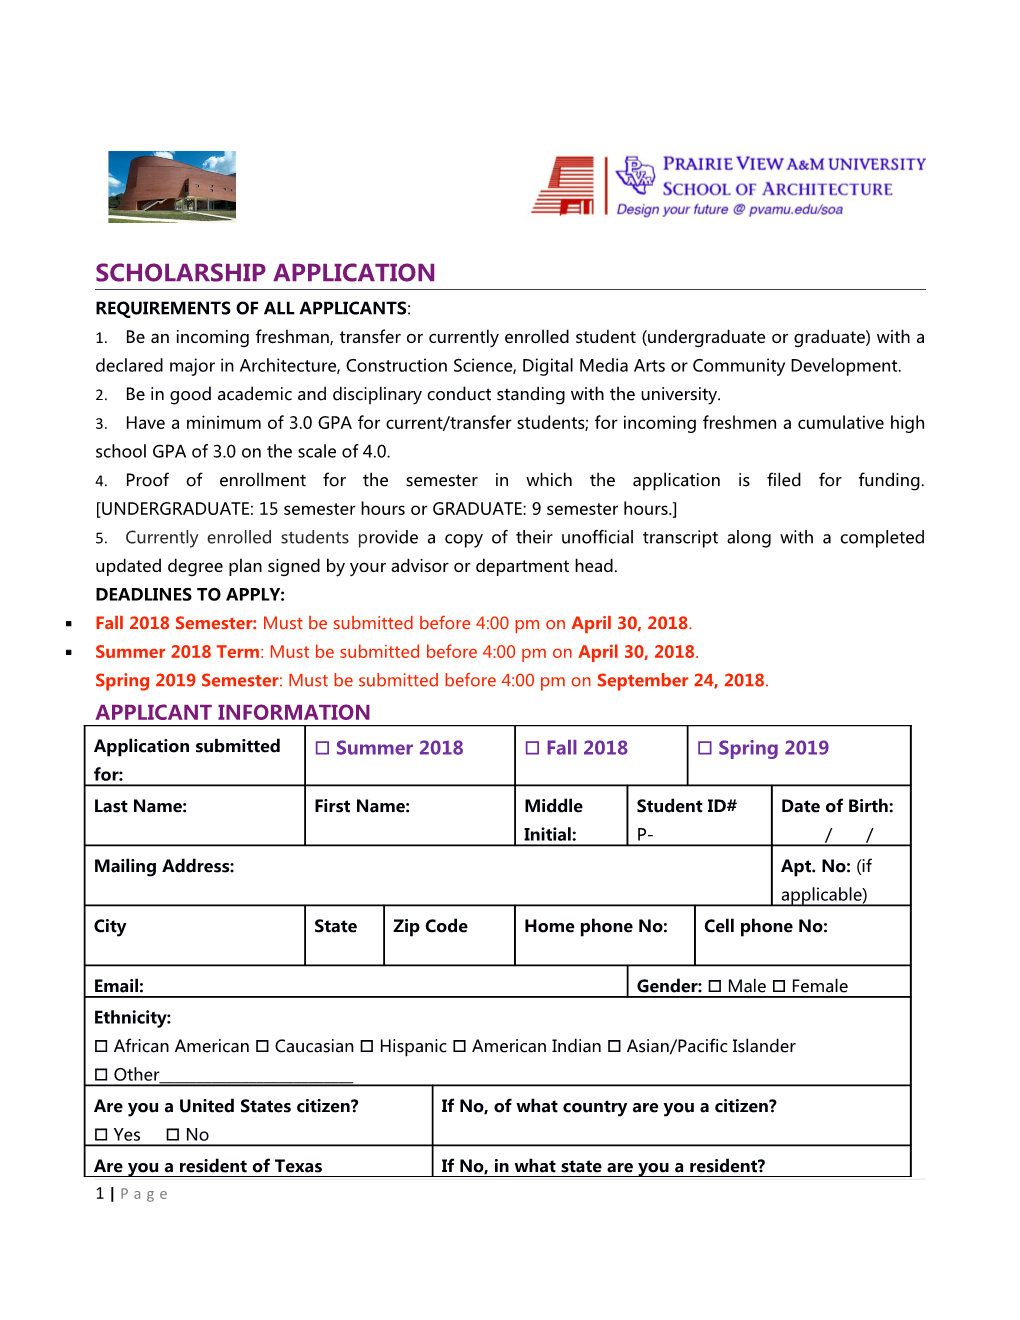 SOA Scholarship Application 1-7-13